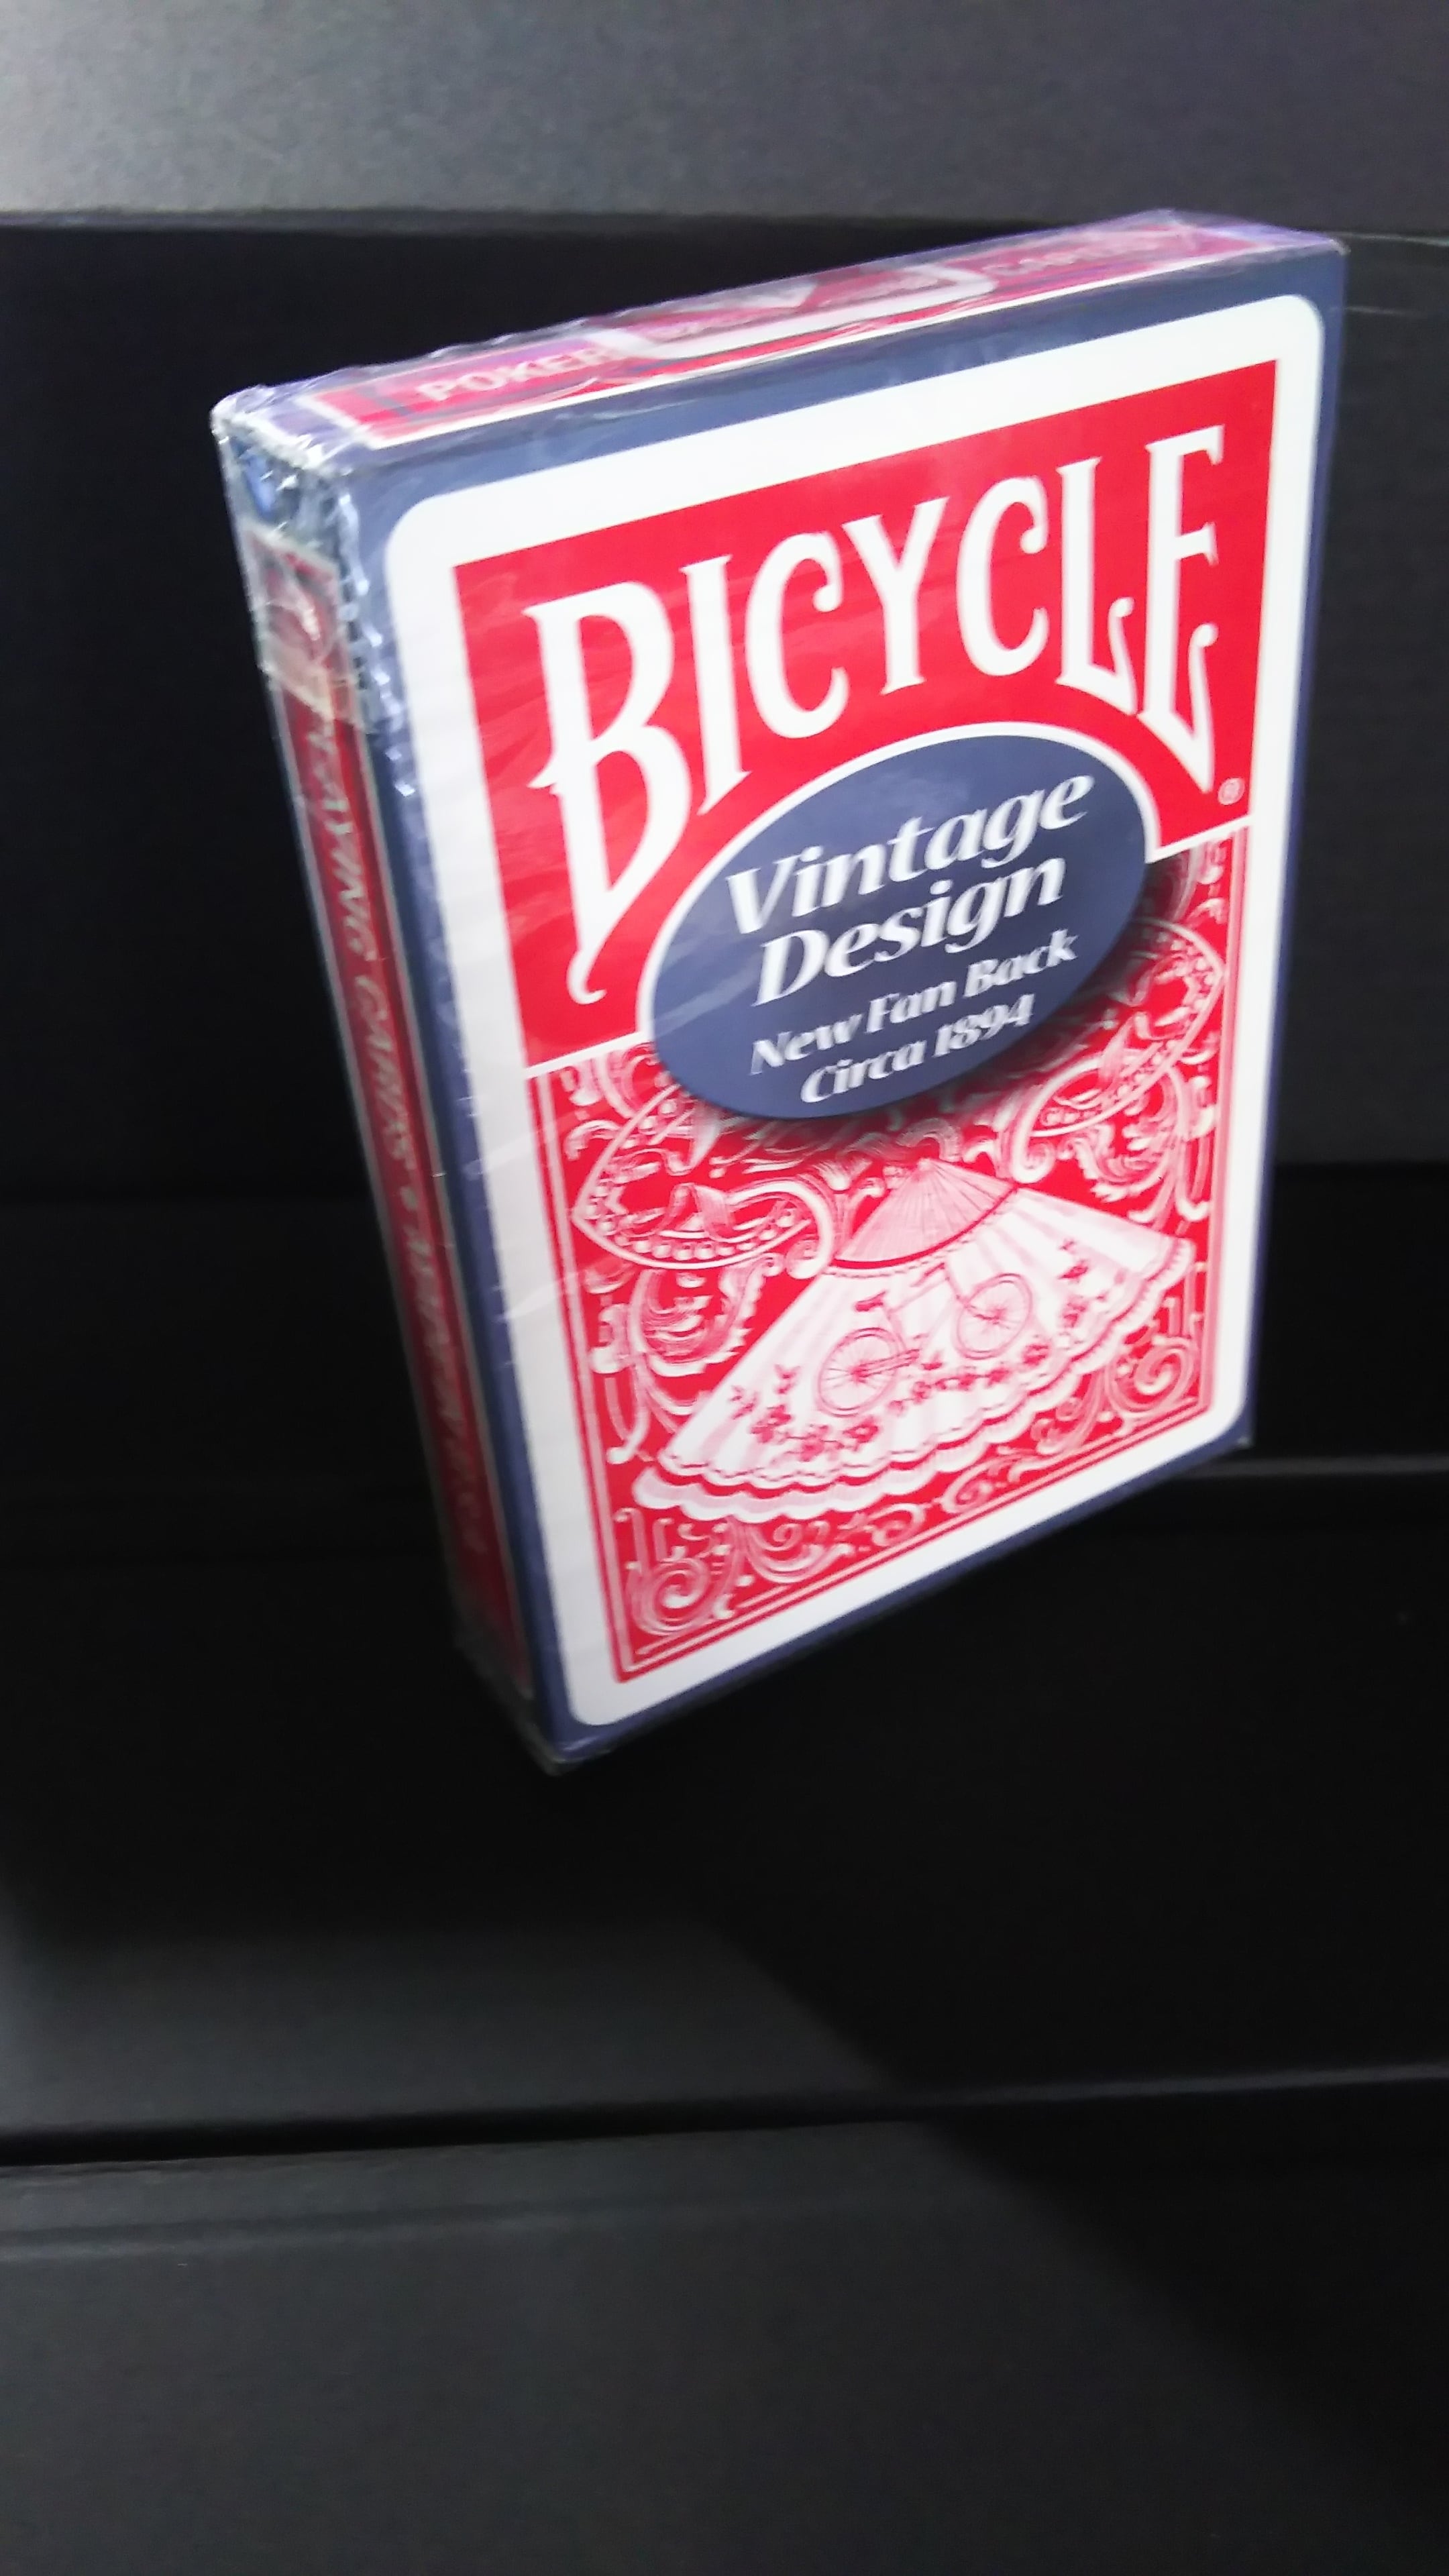 Bicycle Vintage Design New Fan Back 赤 トランプ | www.vinoflix.com